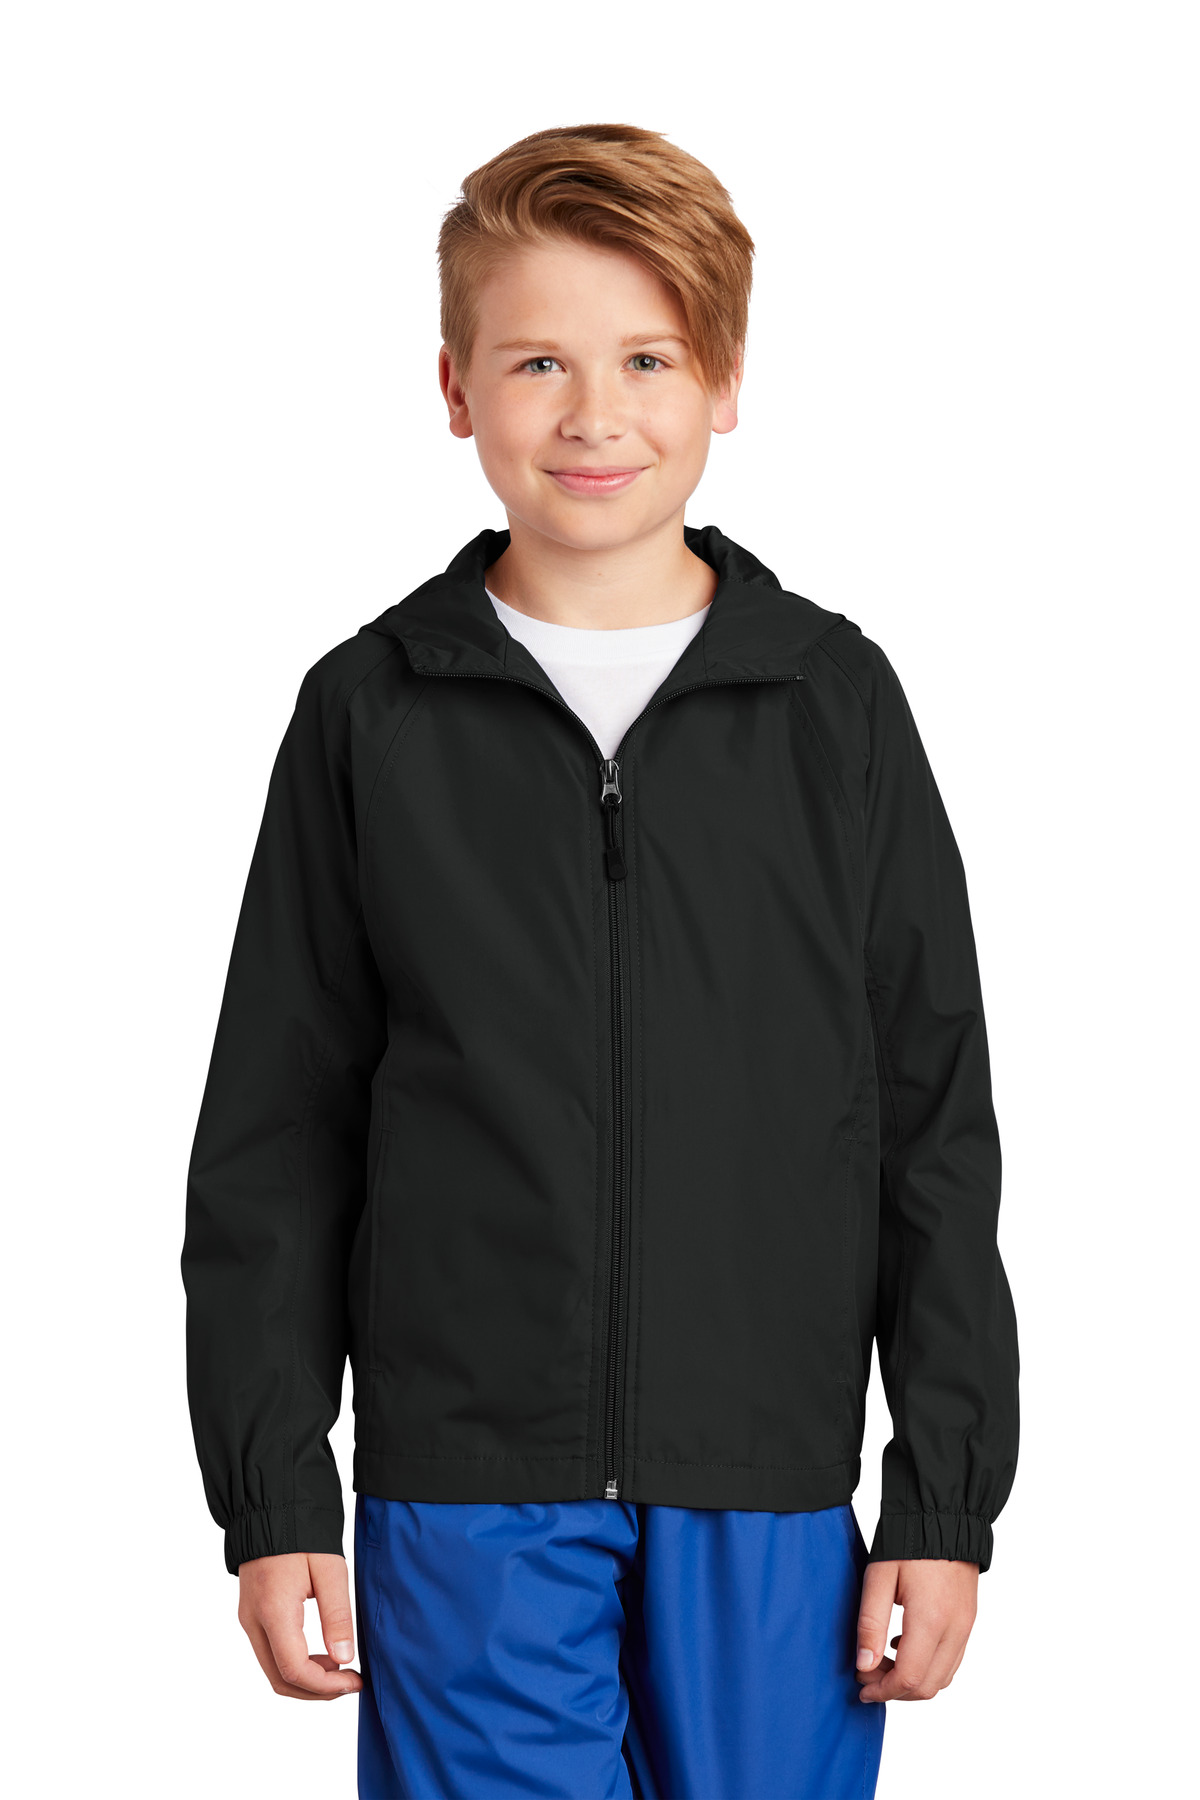 Sport-Tek Hospitality Youth Activewear & Outerwear ® Youth Hooded Raglan Jacket.-Sport-Tek